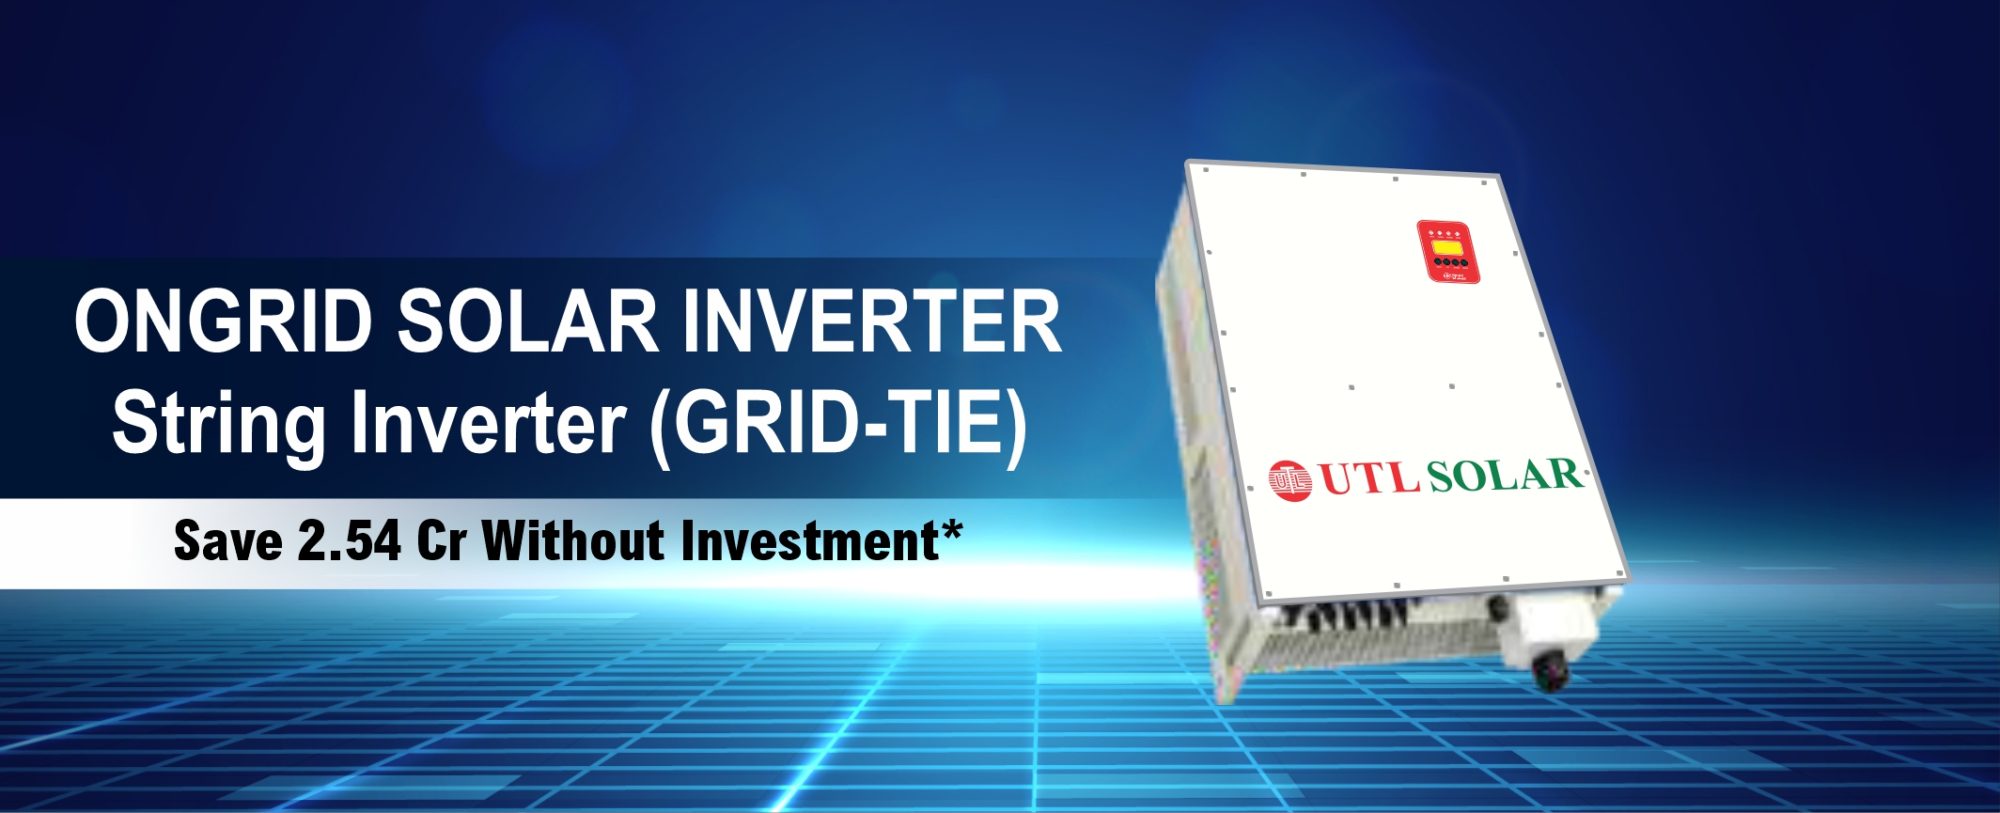 On grid Solar Inverter